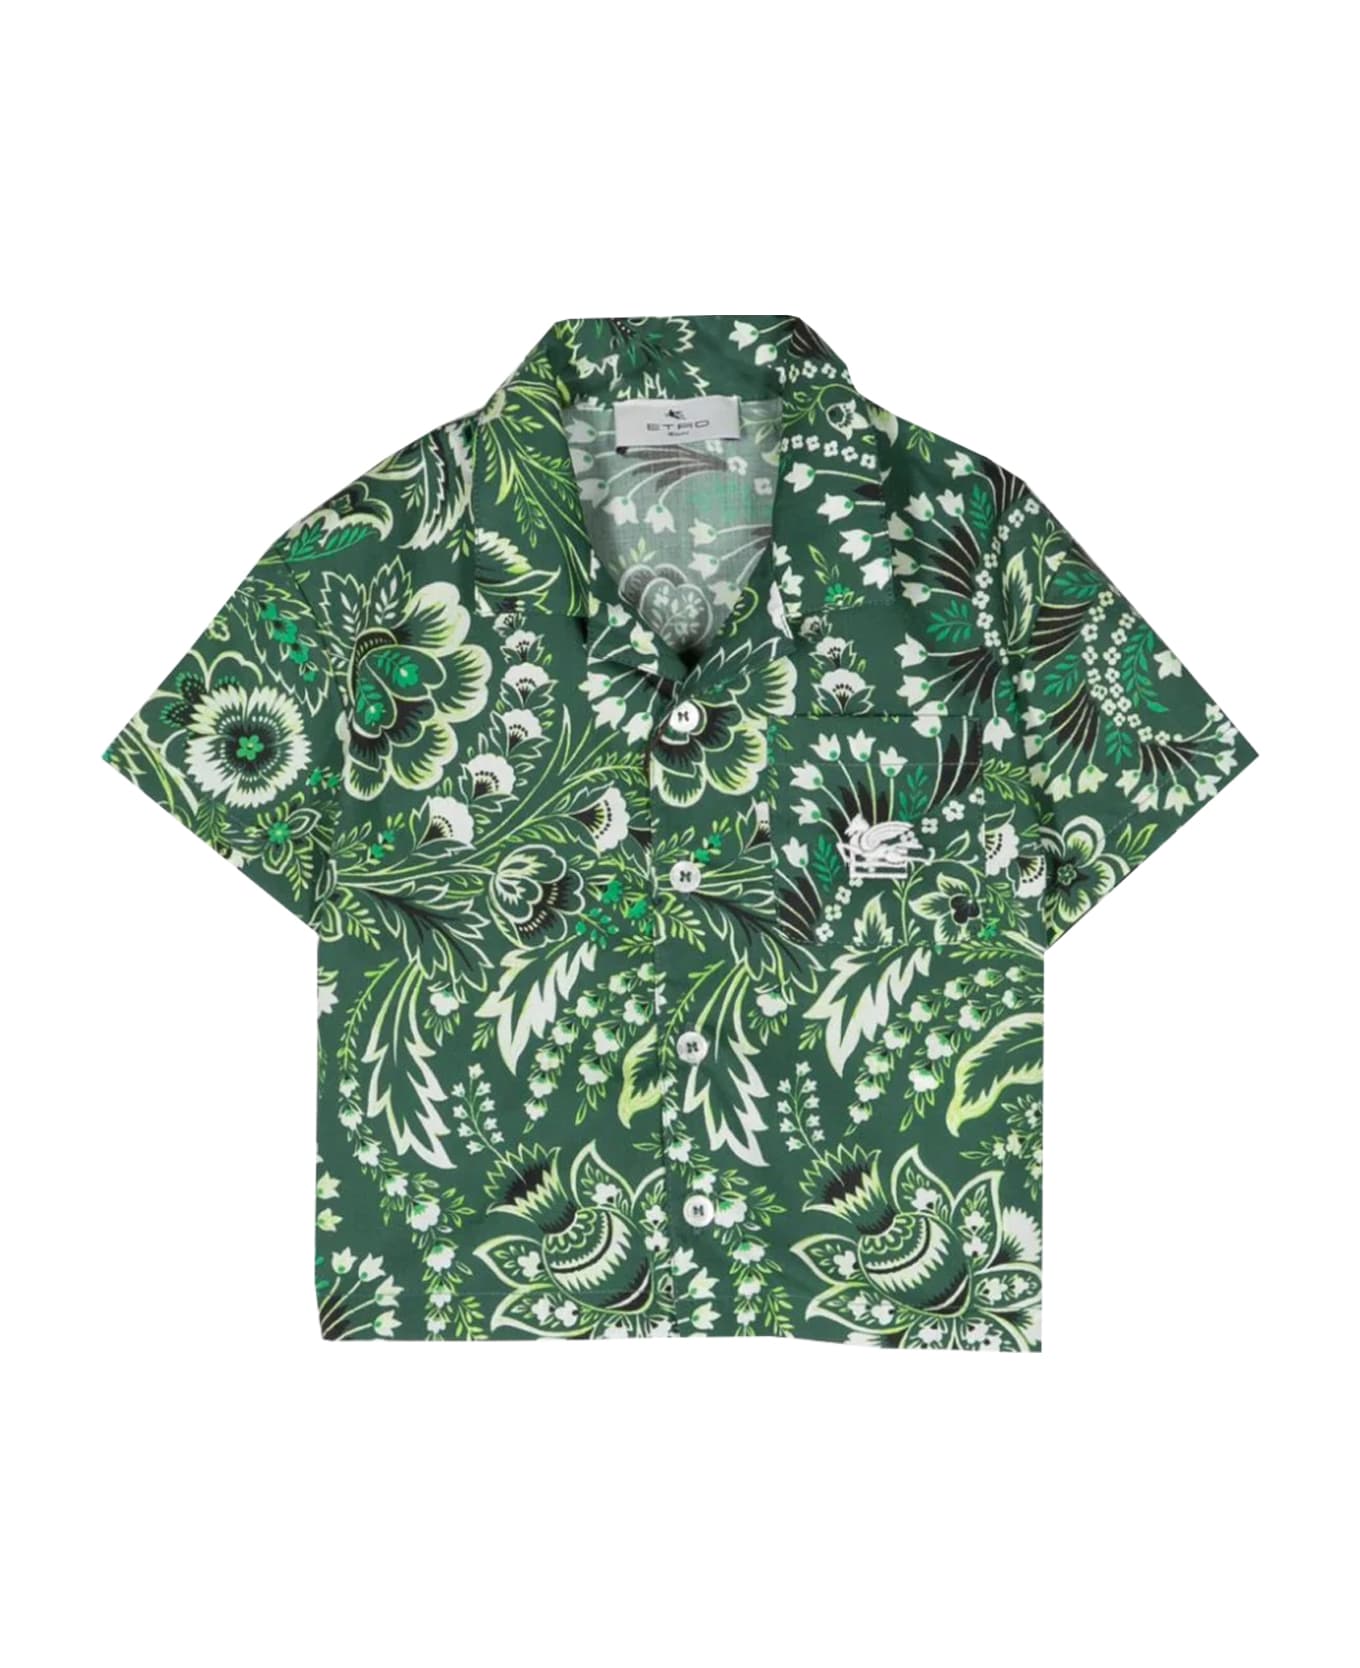 Etro Monochrome Paisley Shirt - Green